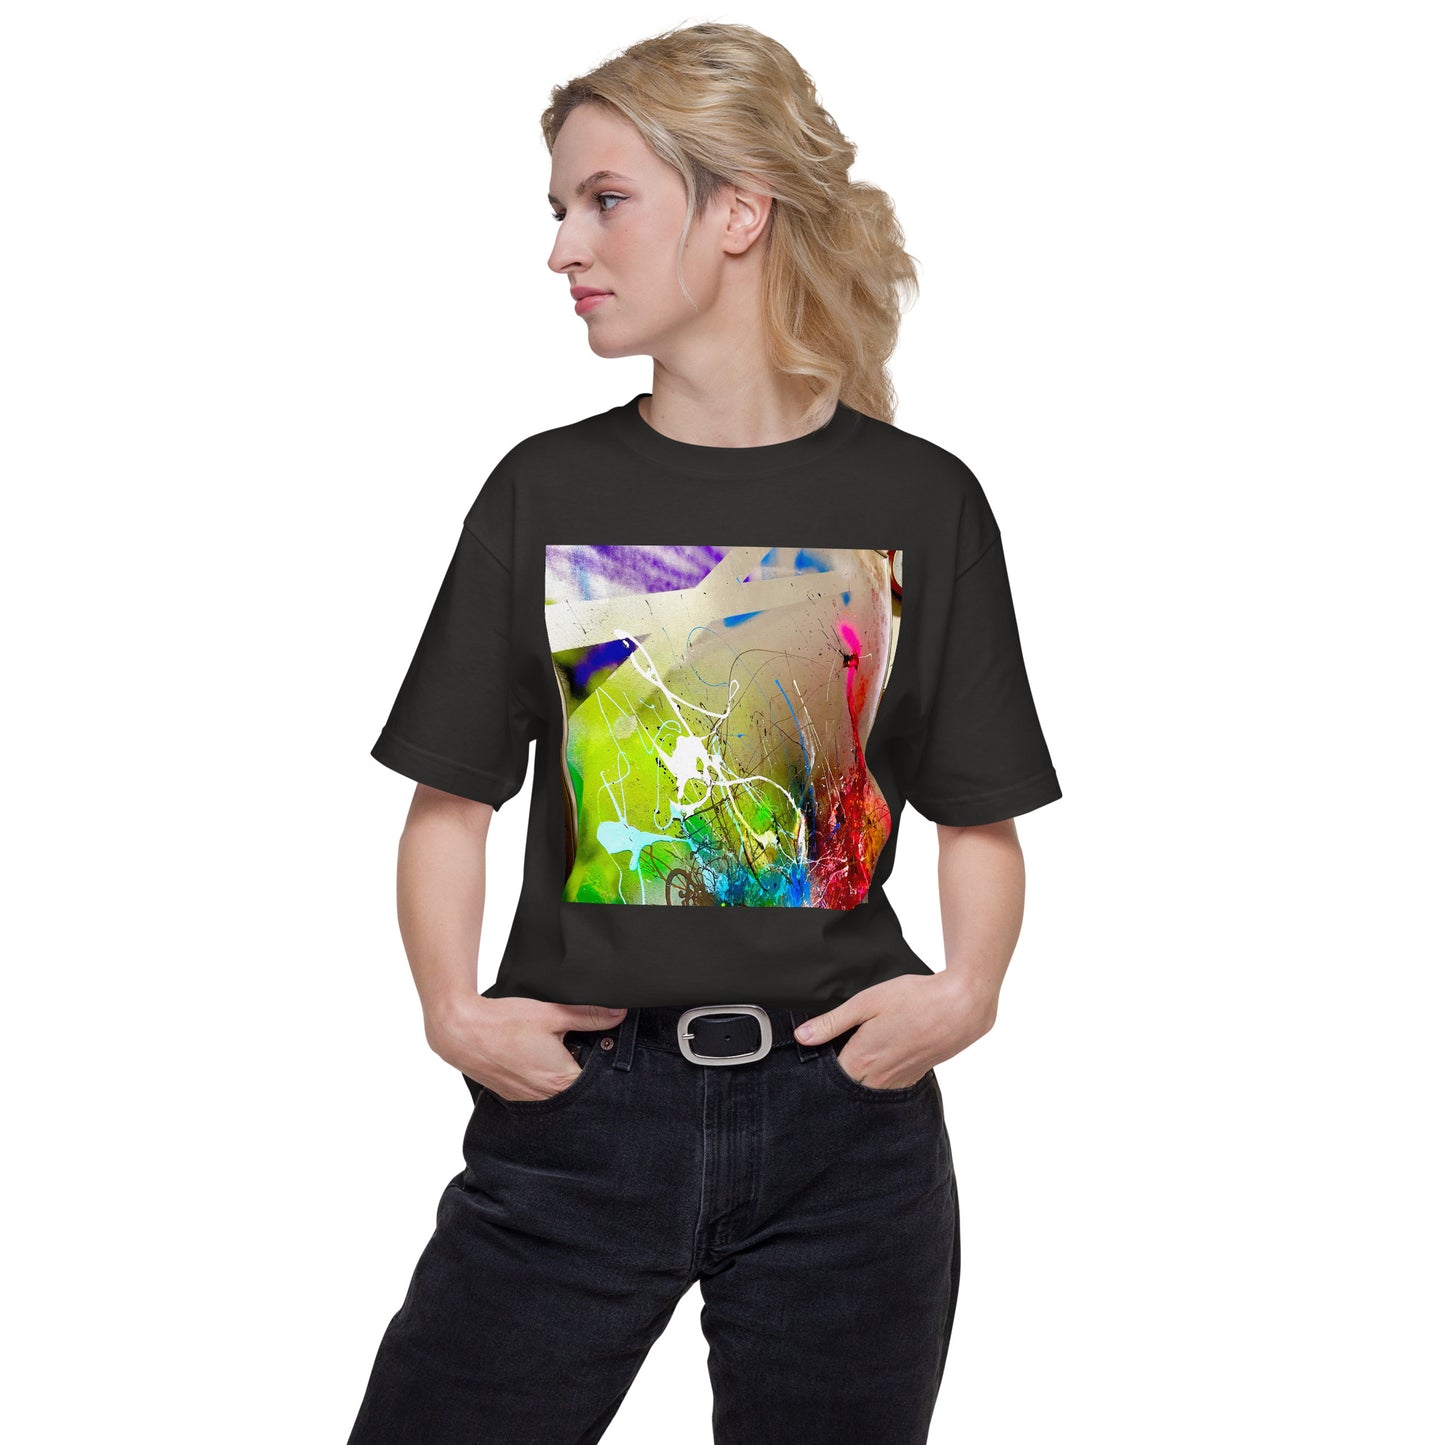 042-Art-Cise-4-前面プリントTシャツ-アートをデザイン